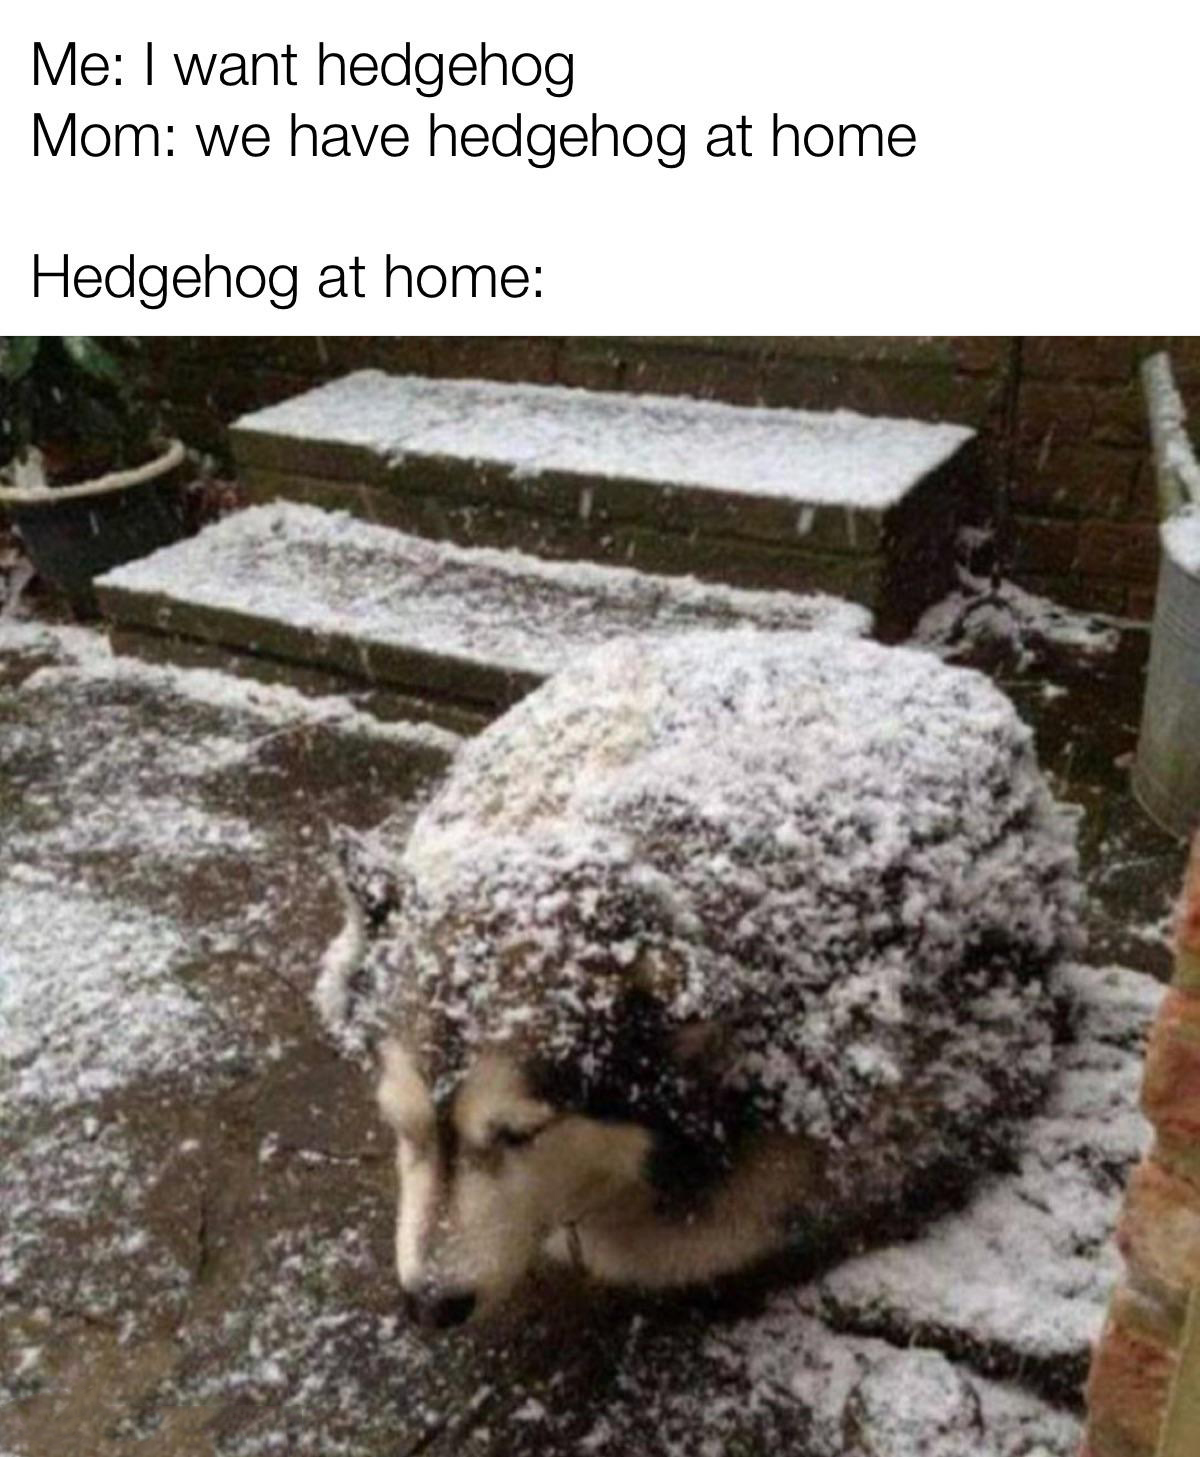 hedge dog meme - Me I want hedgehog Mom we have hedgehog at home Hedgehog at home